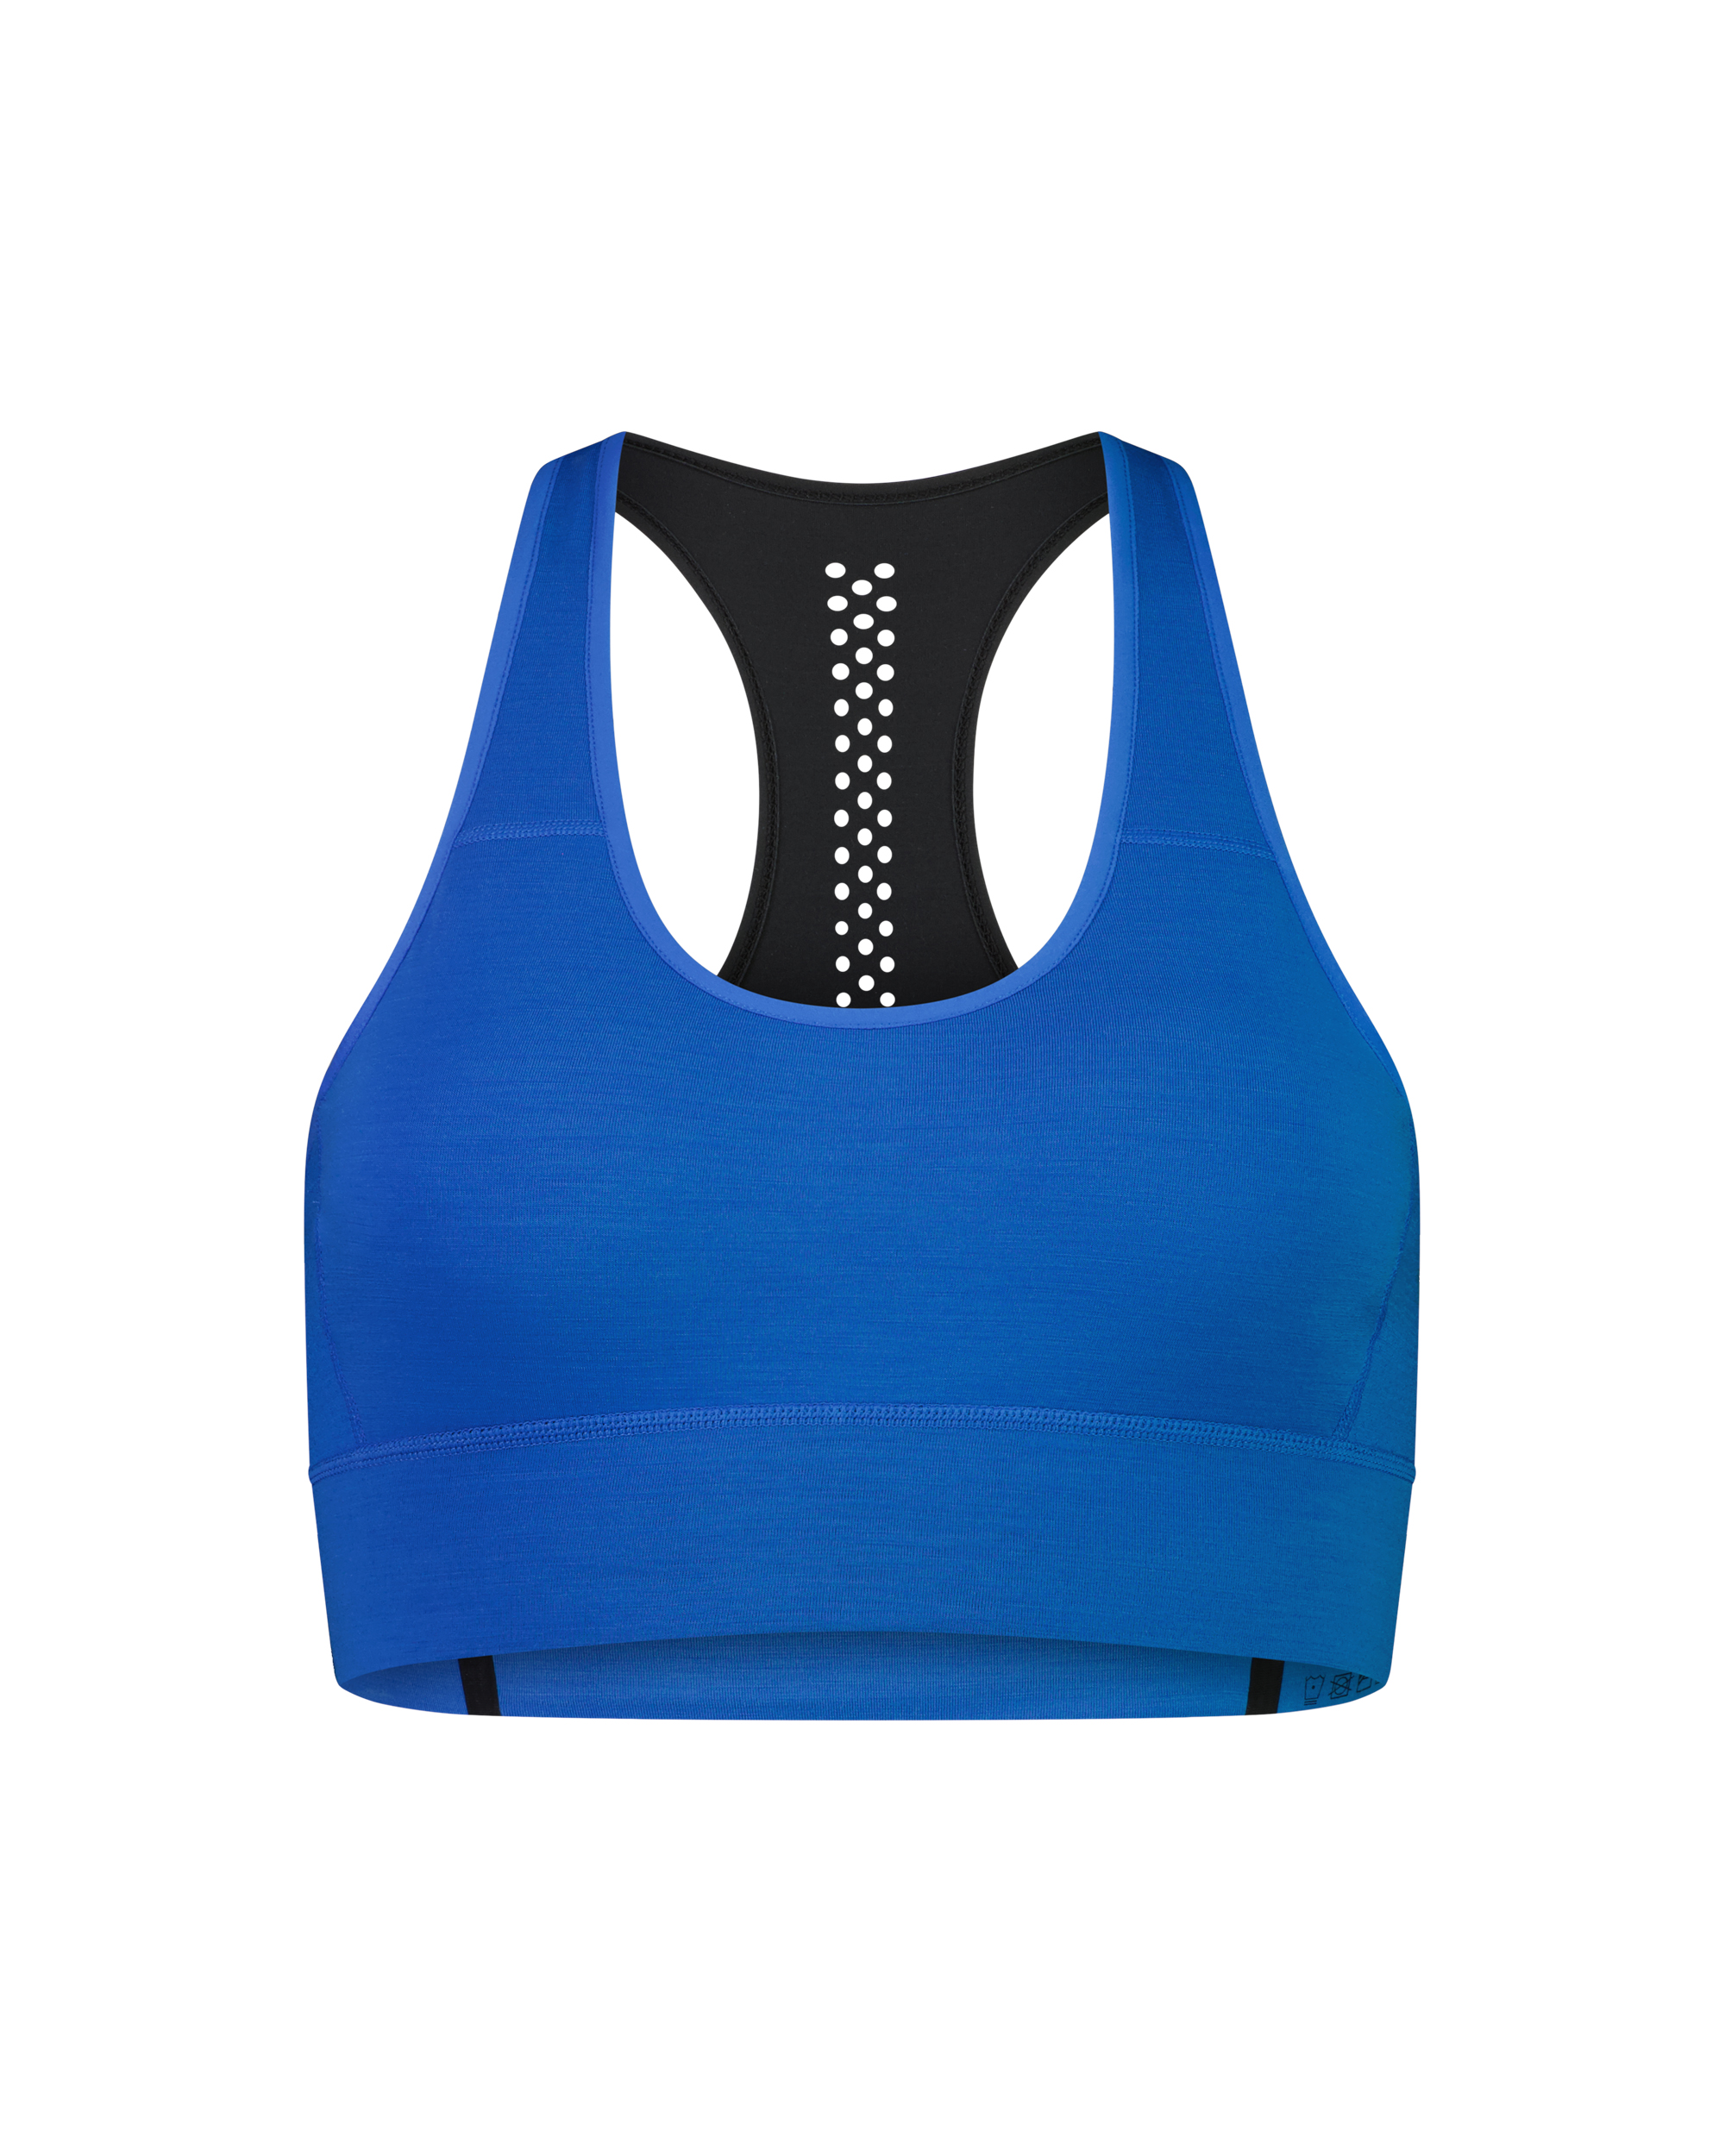 Mons Royale Women's Stratos Merino Shirt Sports Bra Pop Blue L, Pop Blue